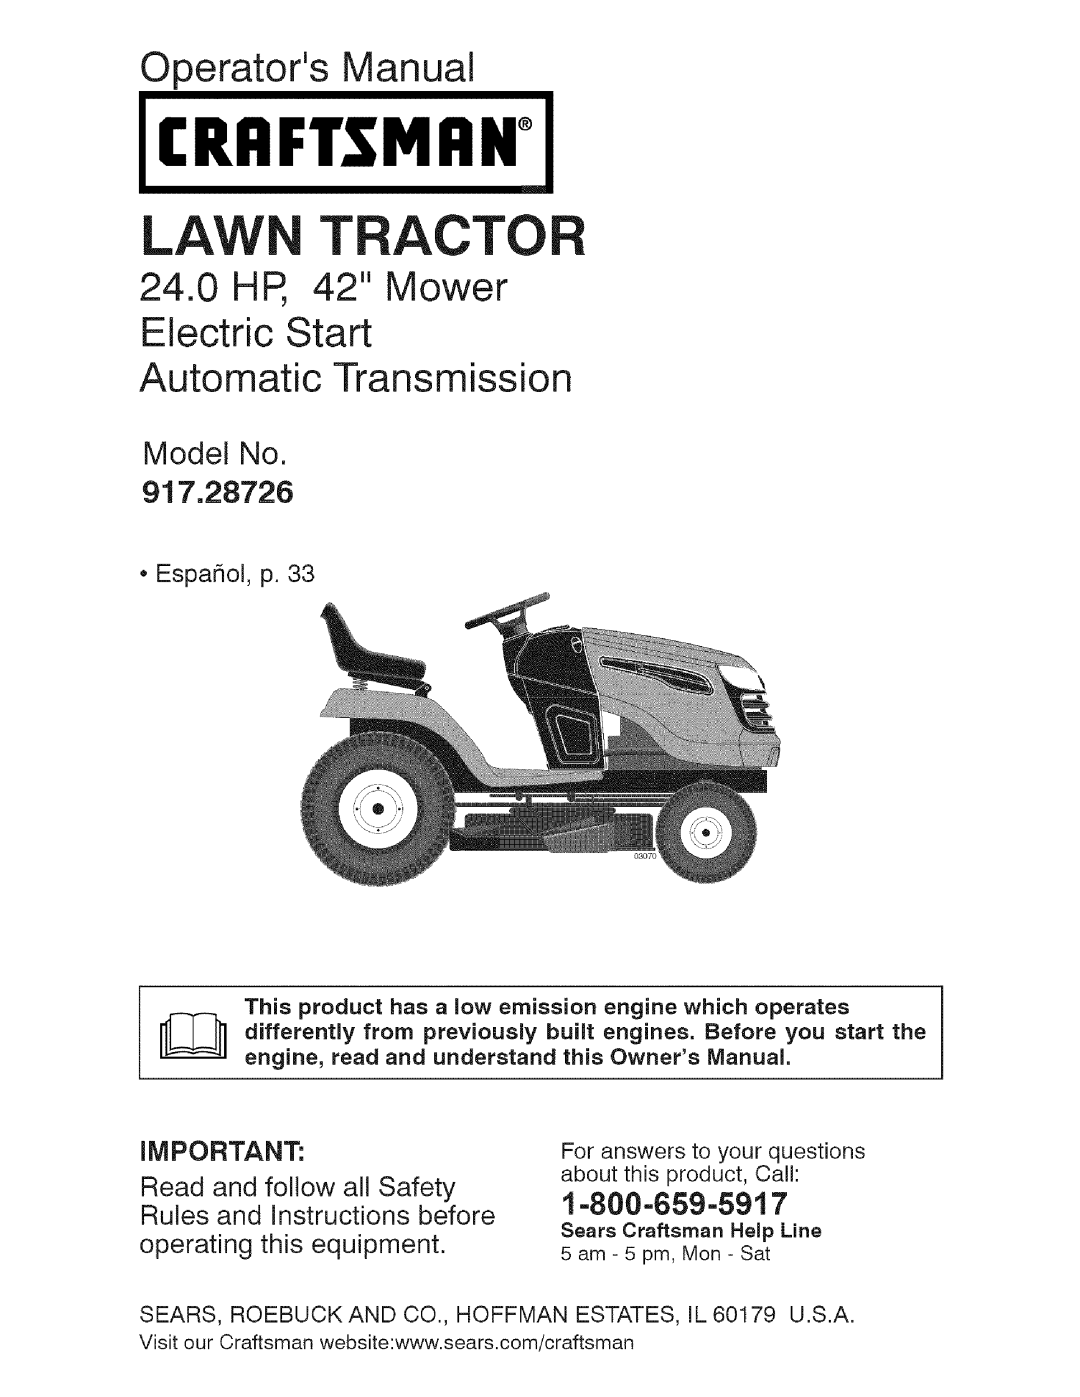 Craftsman owner manual Operators Manual, Rrftsmrn, Law Tractor, Model No 917.28726, t -800-659-59t 